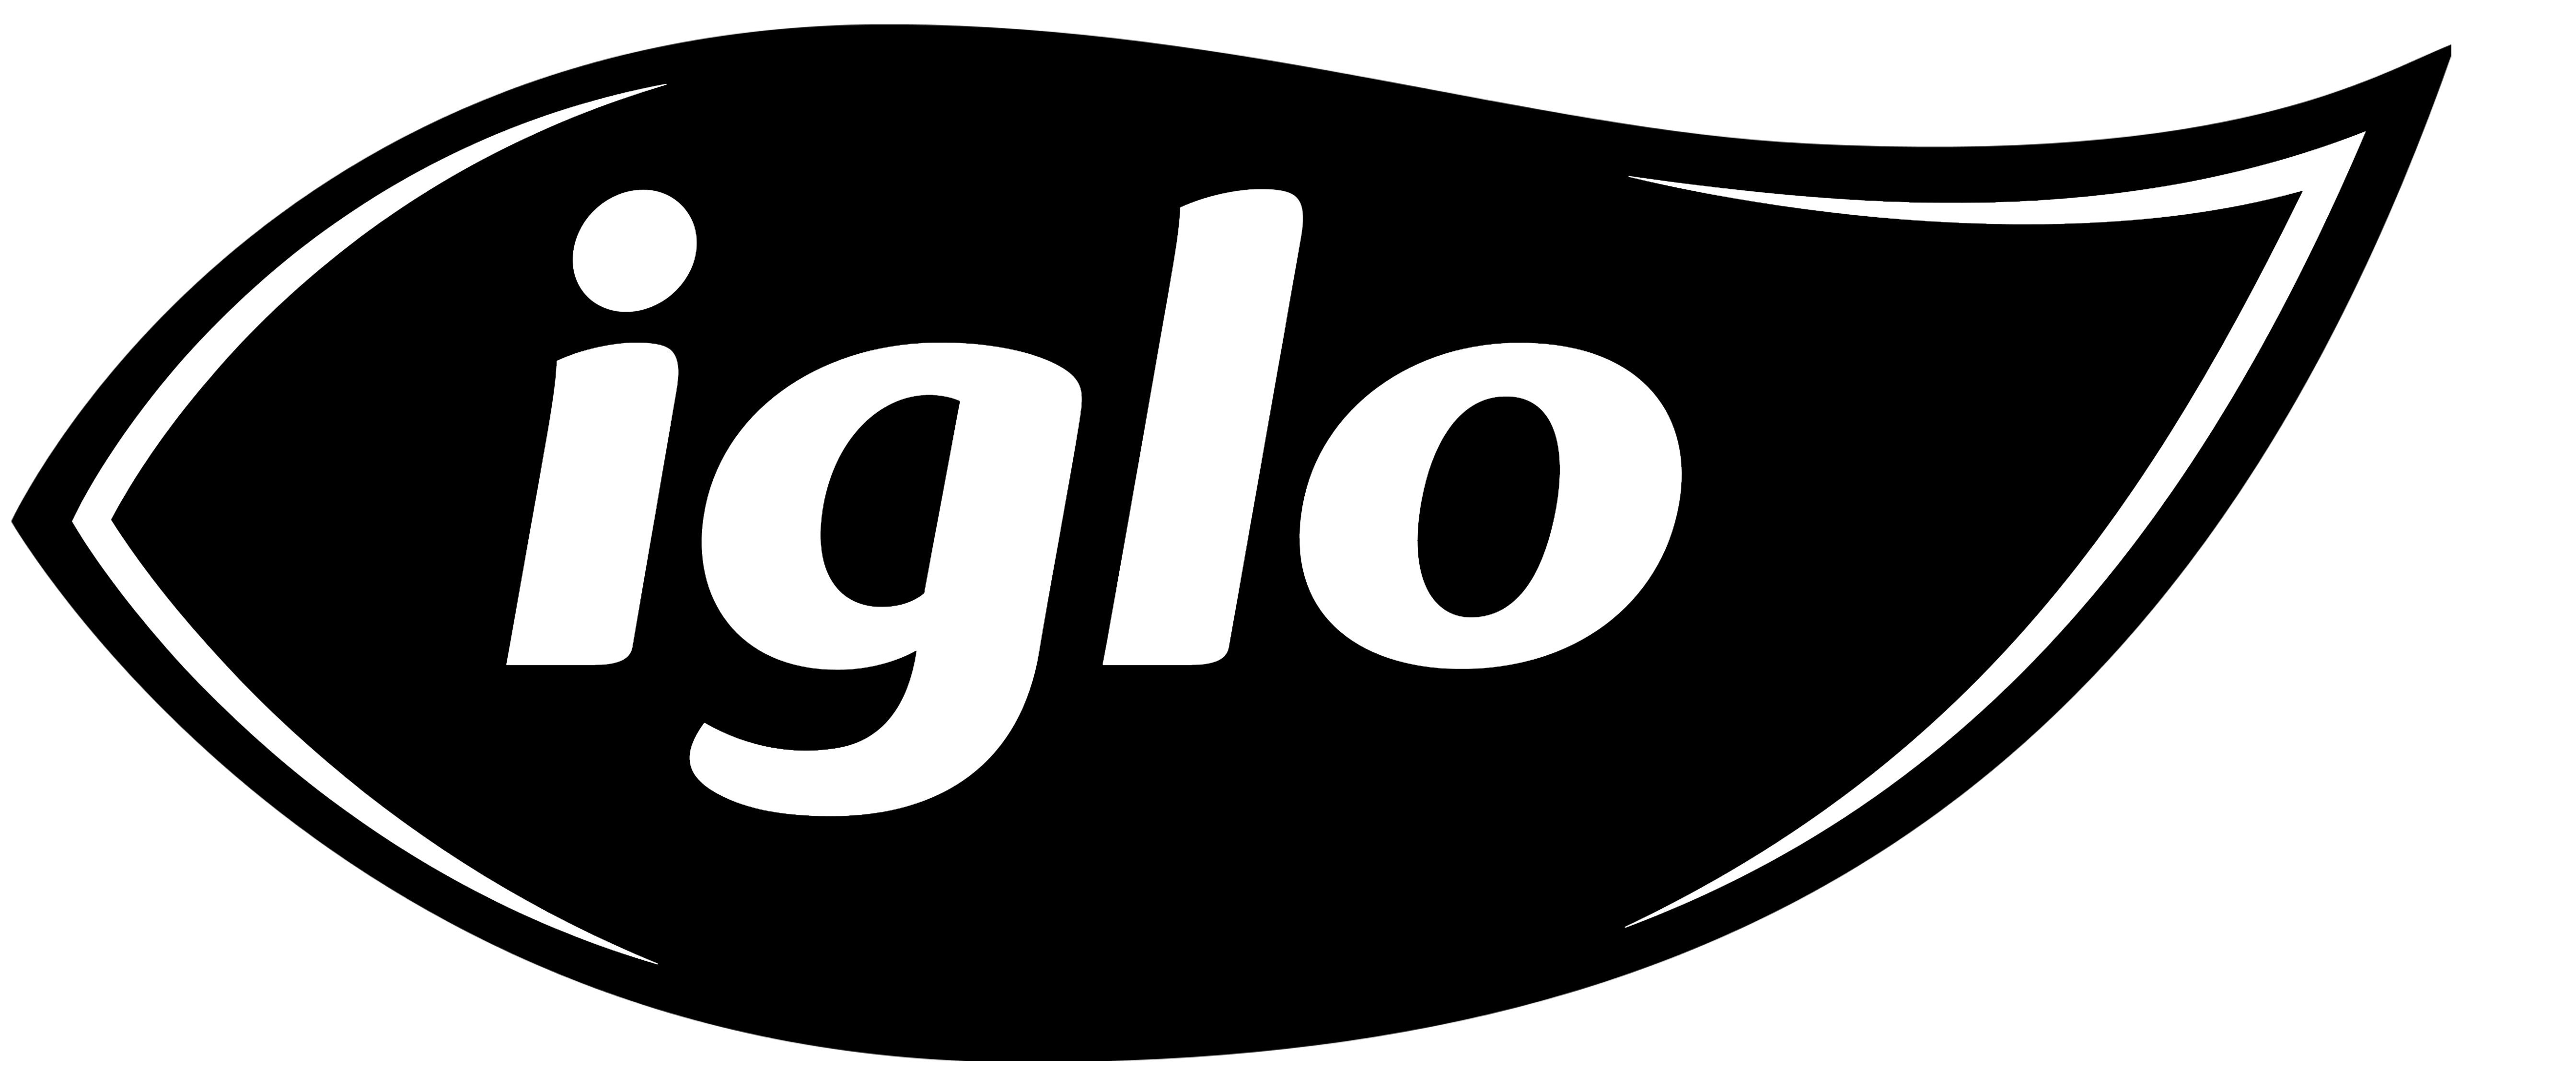 Testimonial Logo 6